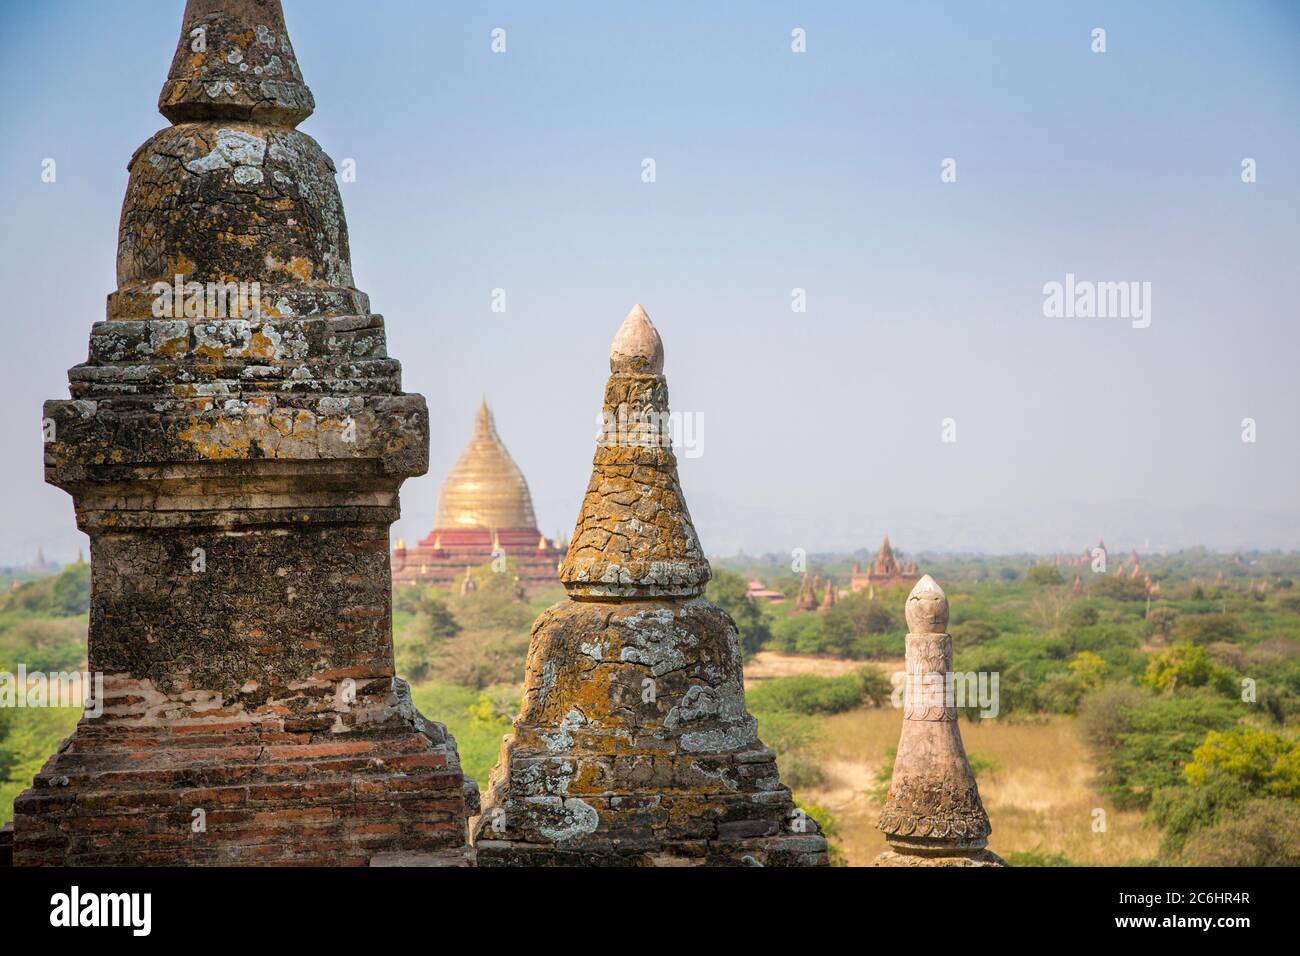 Pagodas and stupas in Old Bagan, Myanmar Stock Photo